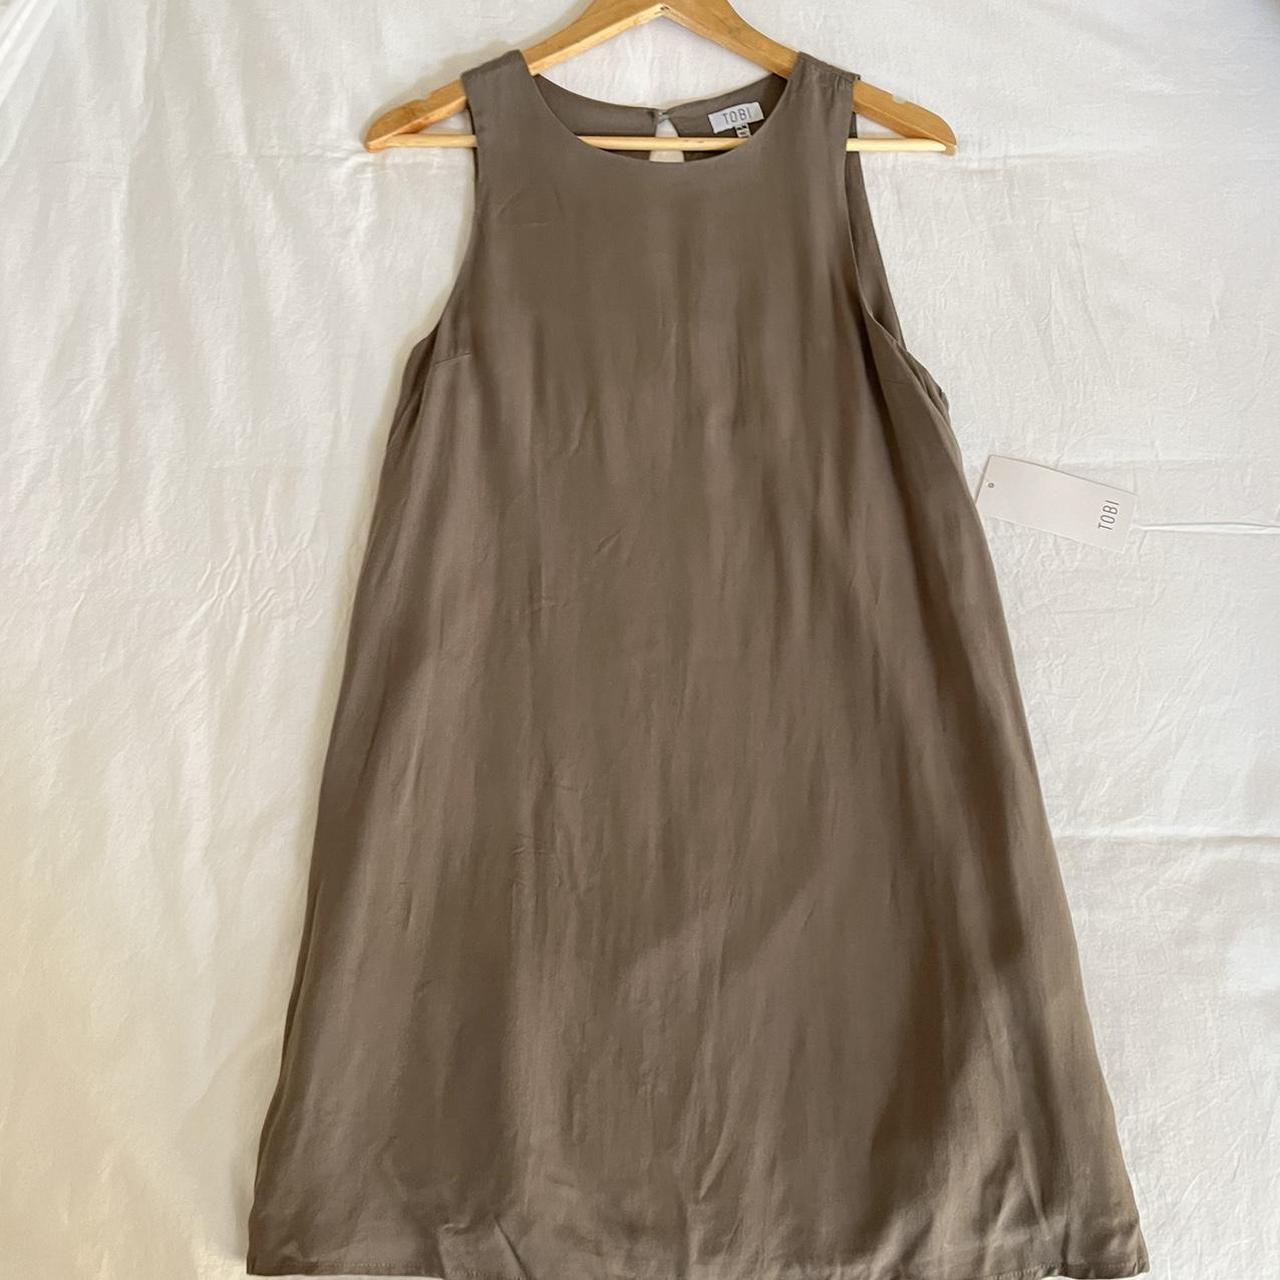 olive green sleeveless dress 🫒 women’s size M brand... - Depop